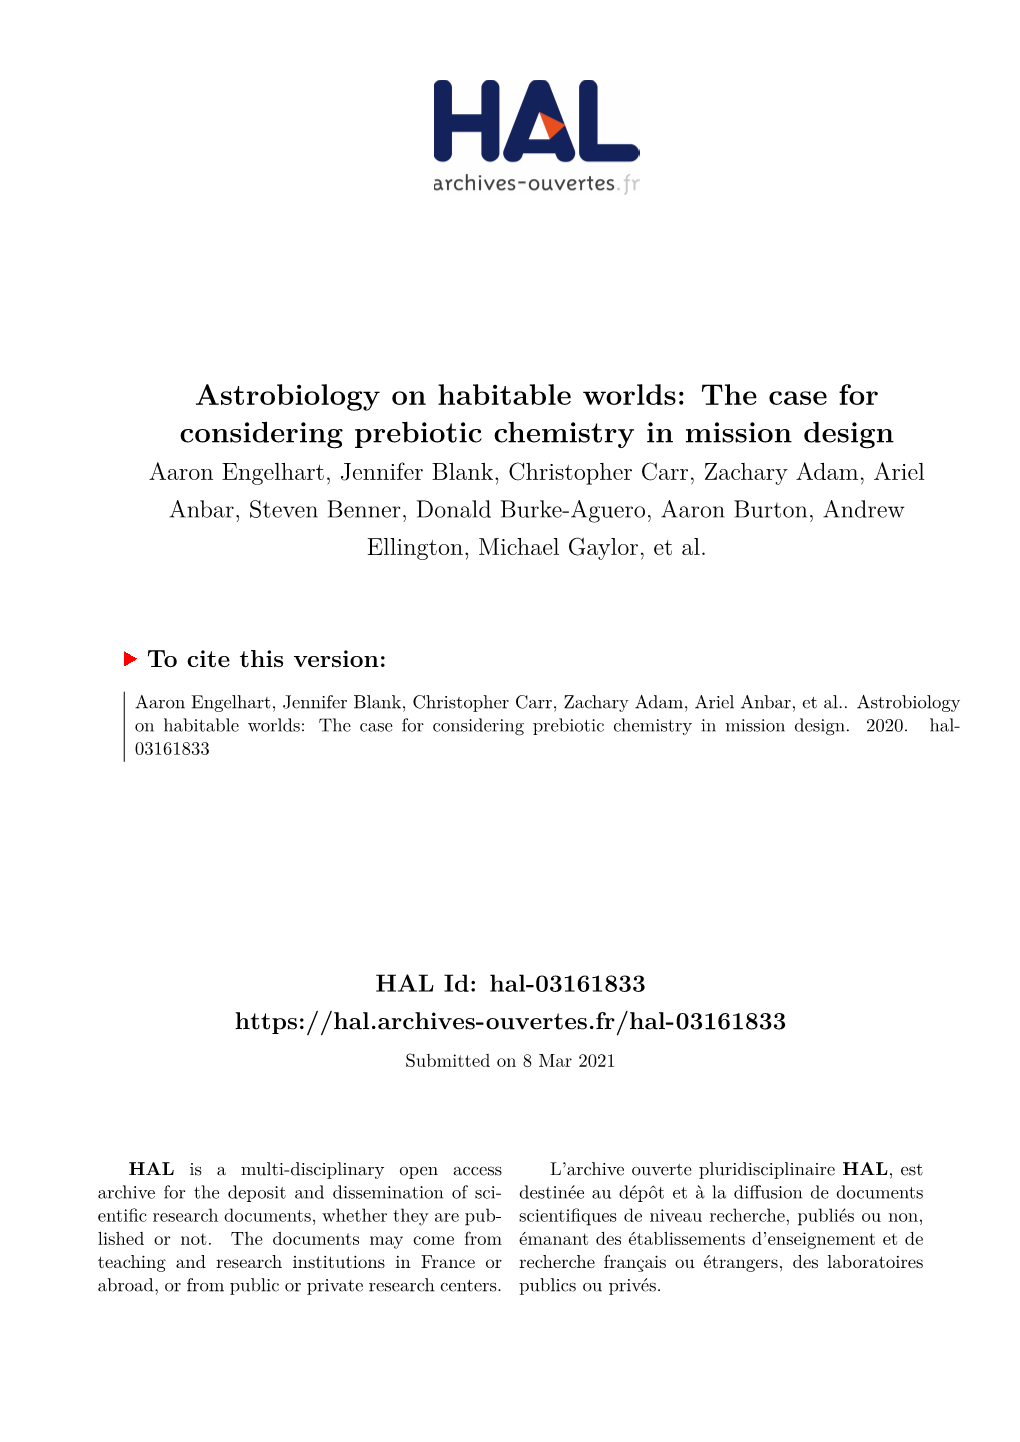 Astrobiology on Habitable Worlds